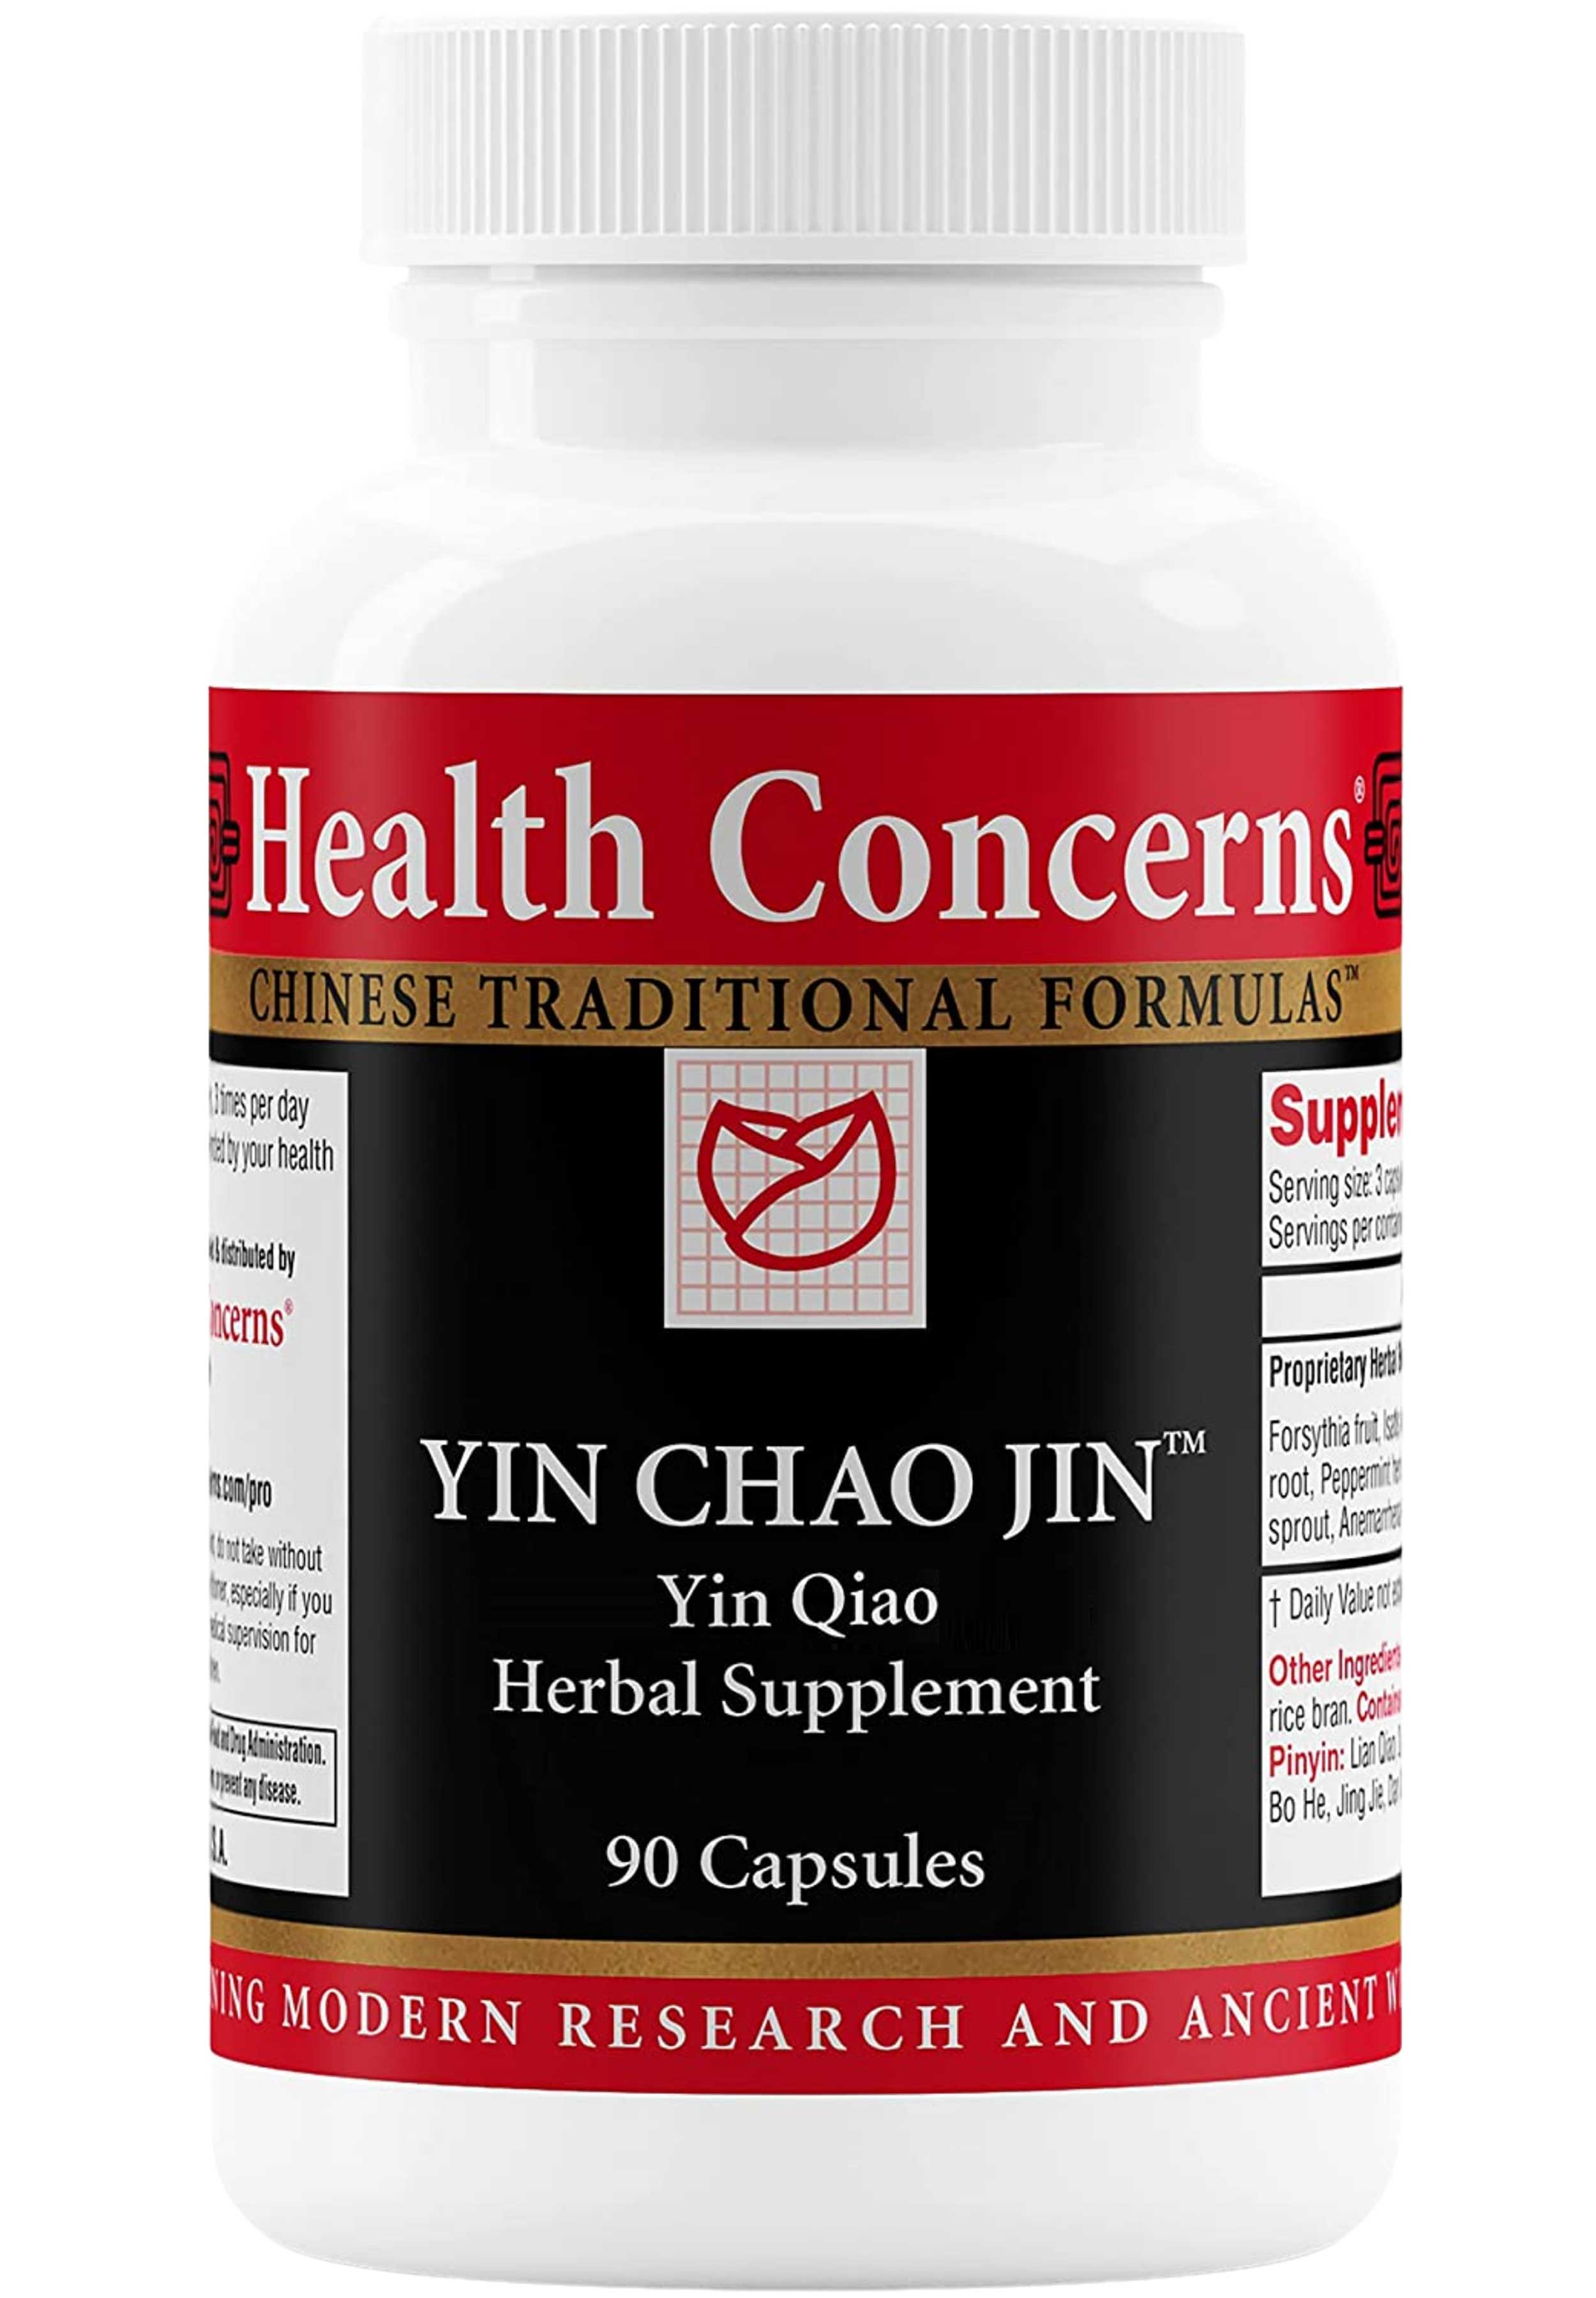 Health Concerns Yin Chao Jin